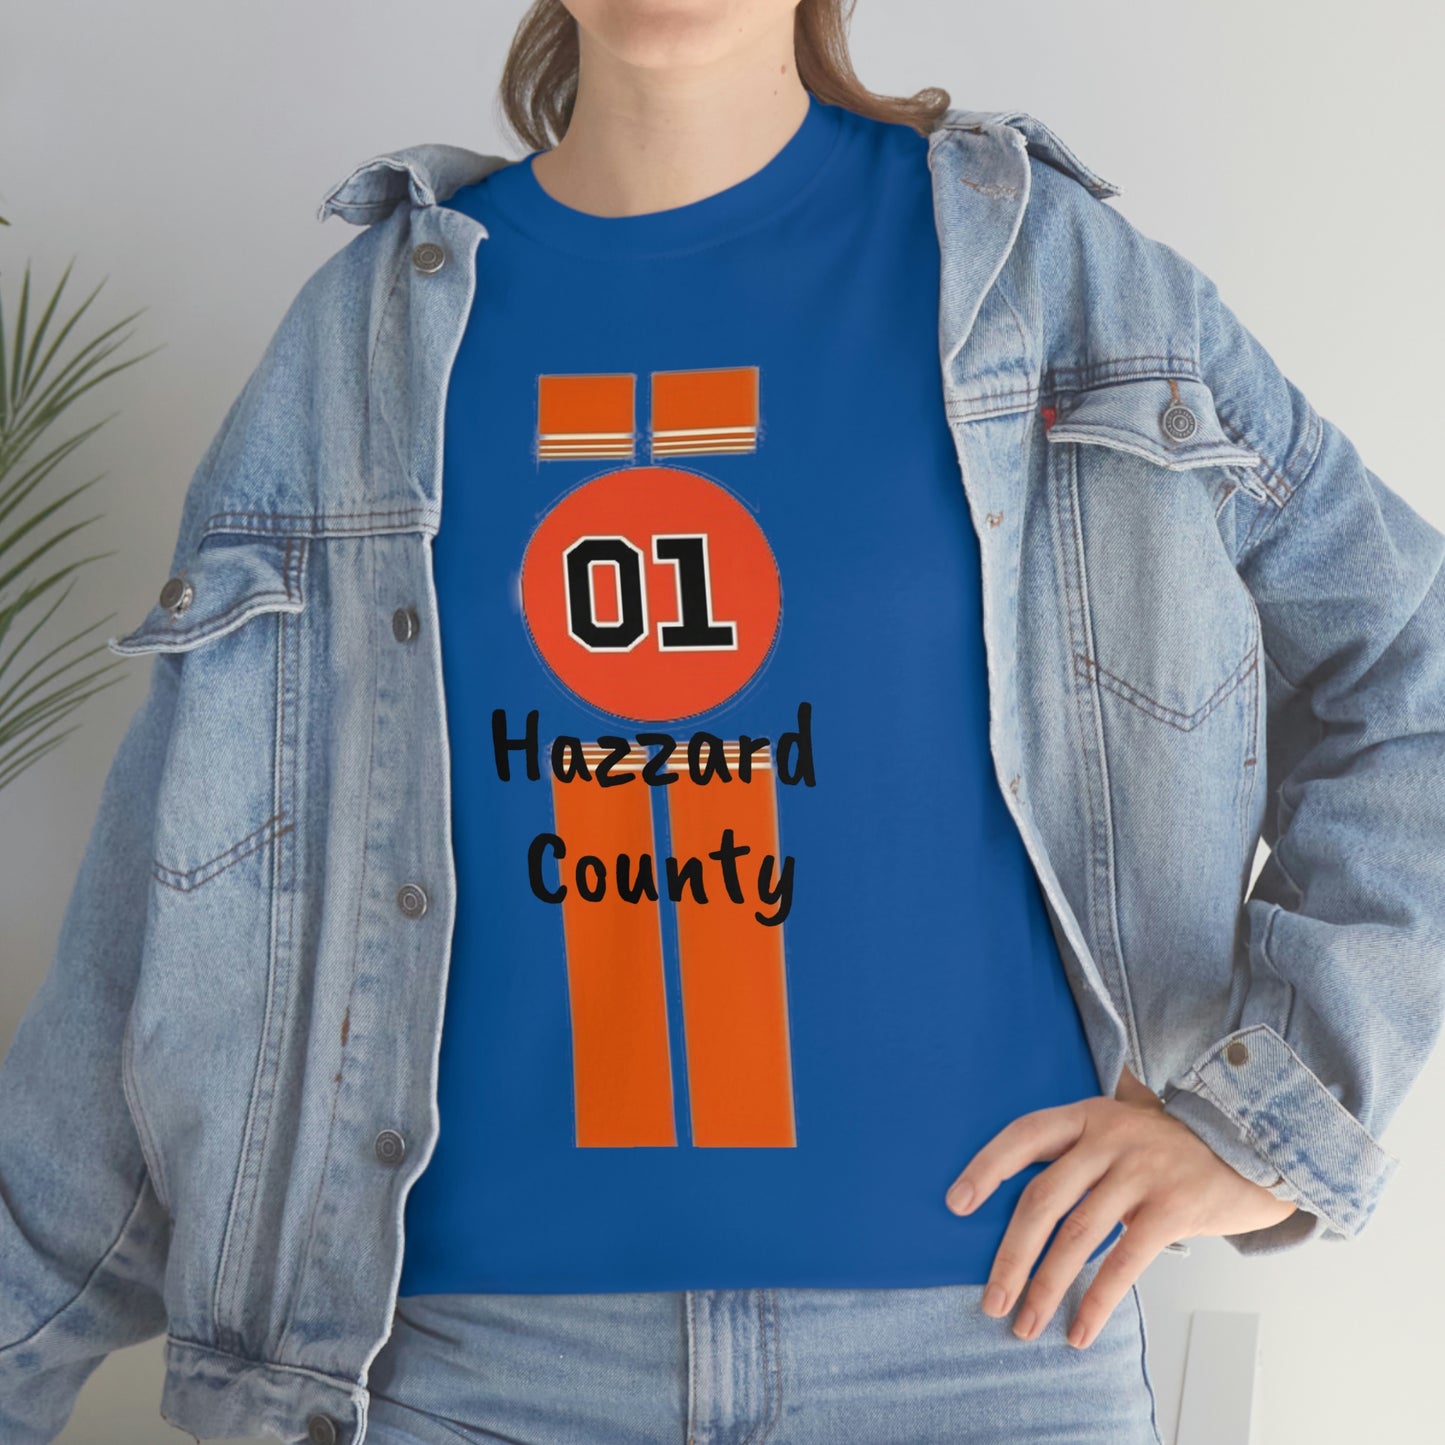 Hazzard County General Lee Racing Stripes Heavy Cotton Tee